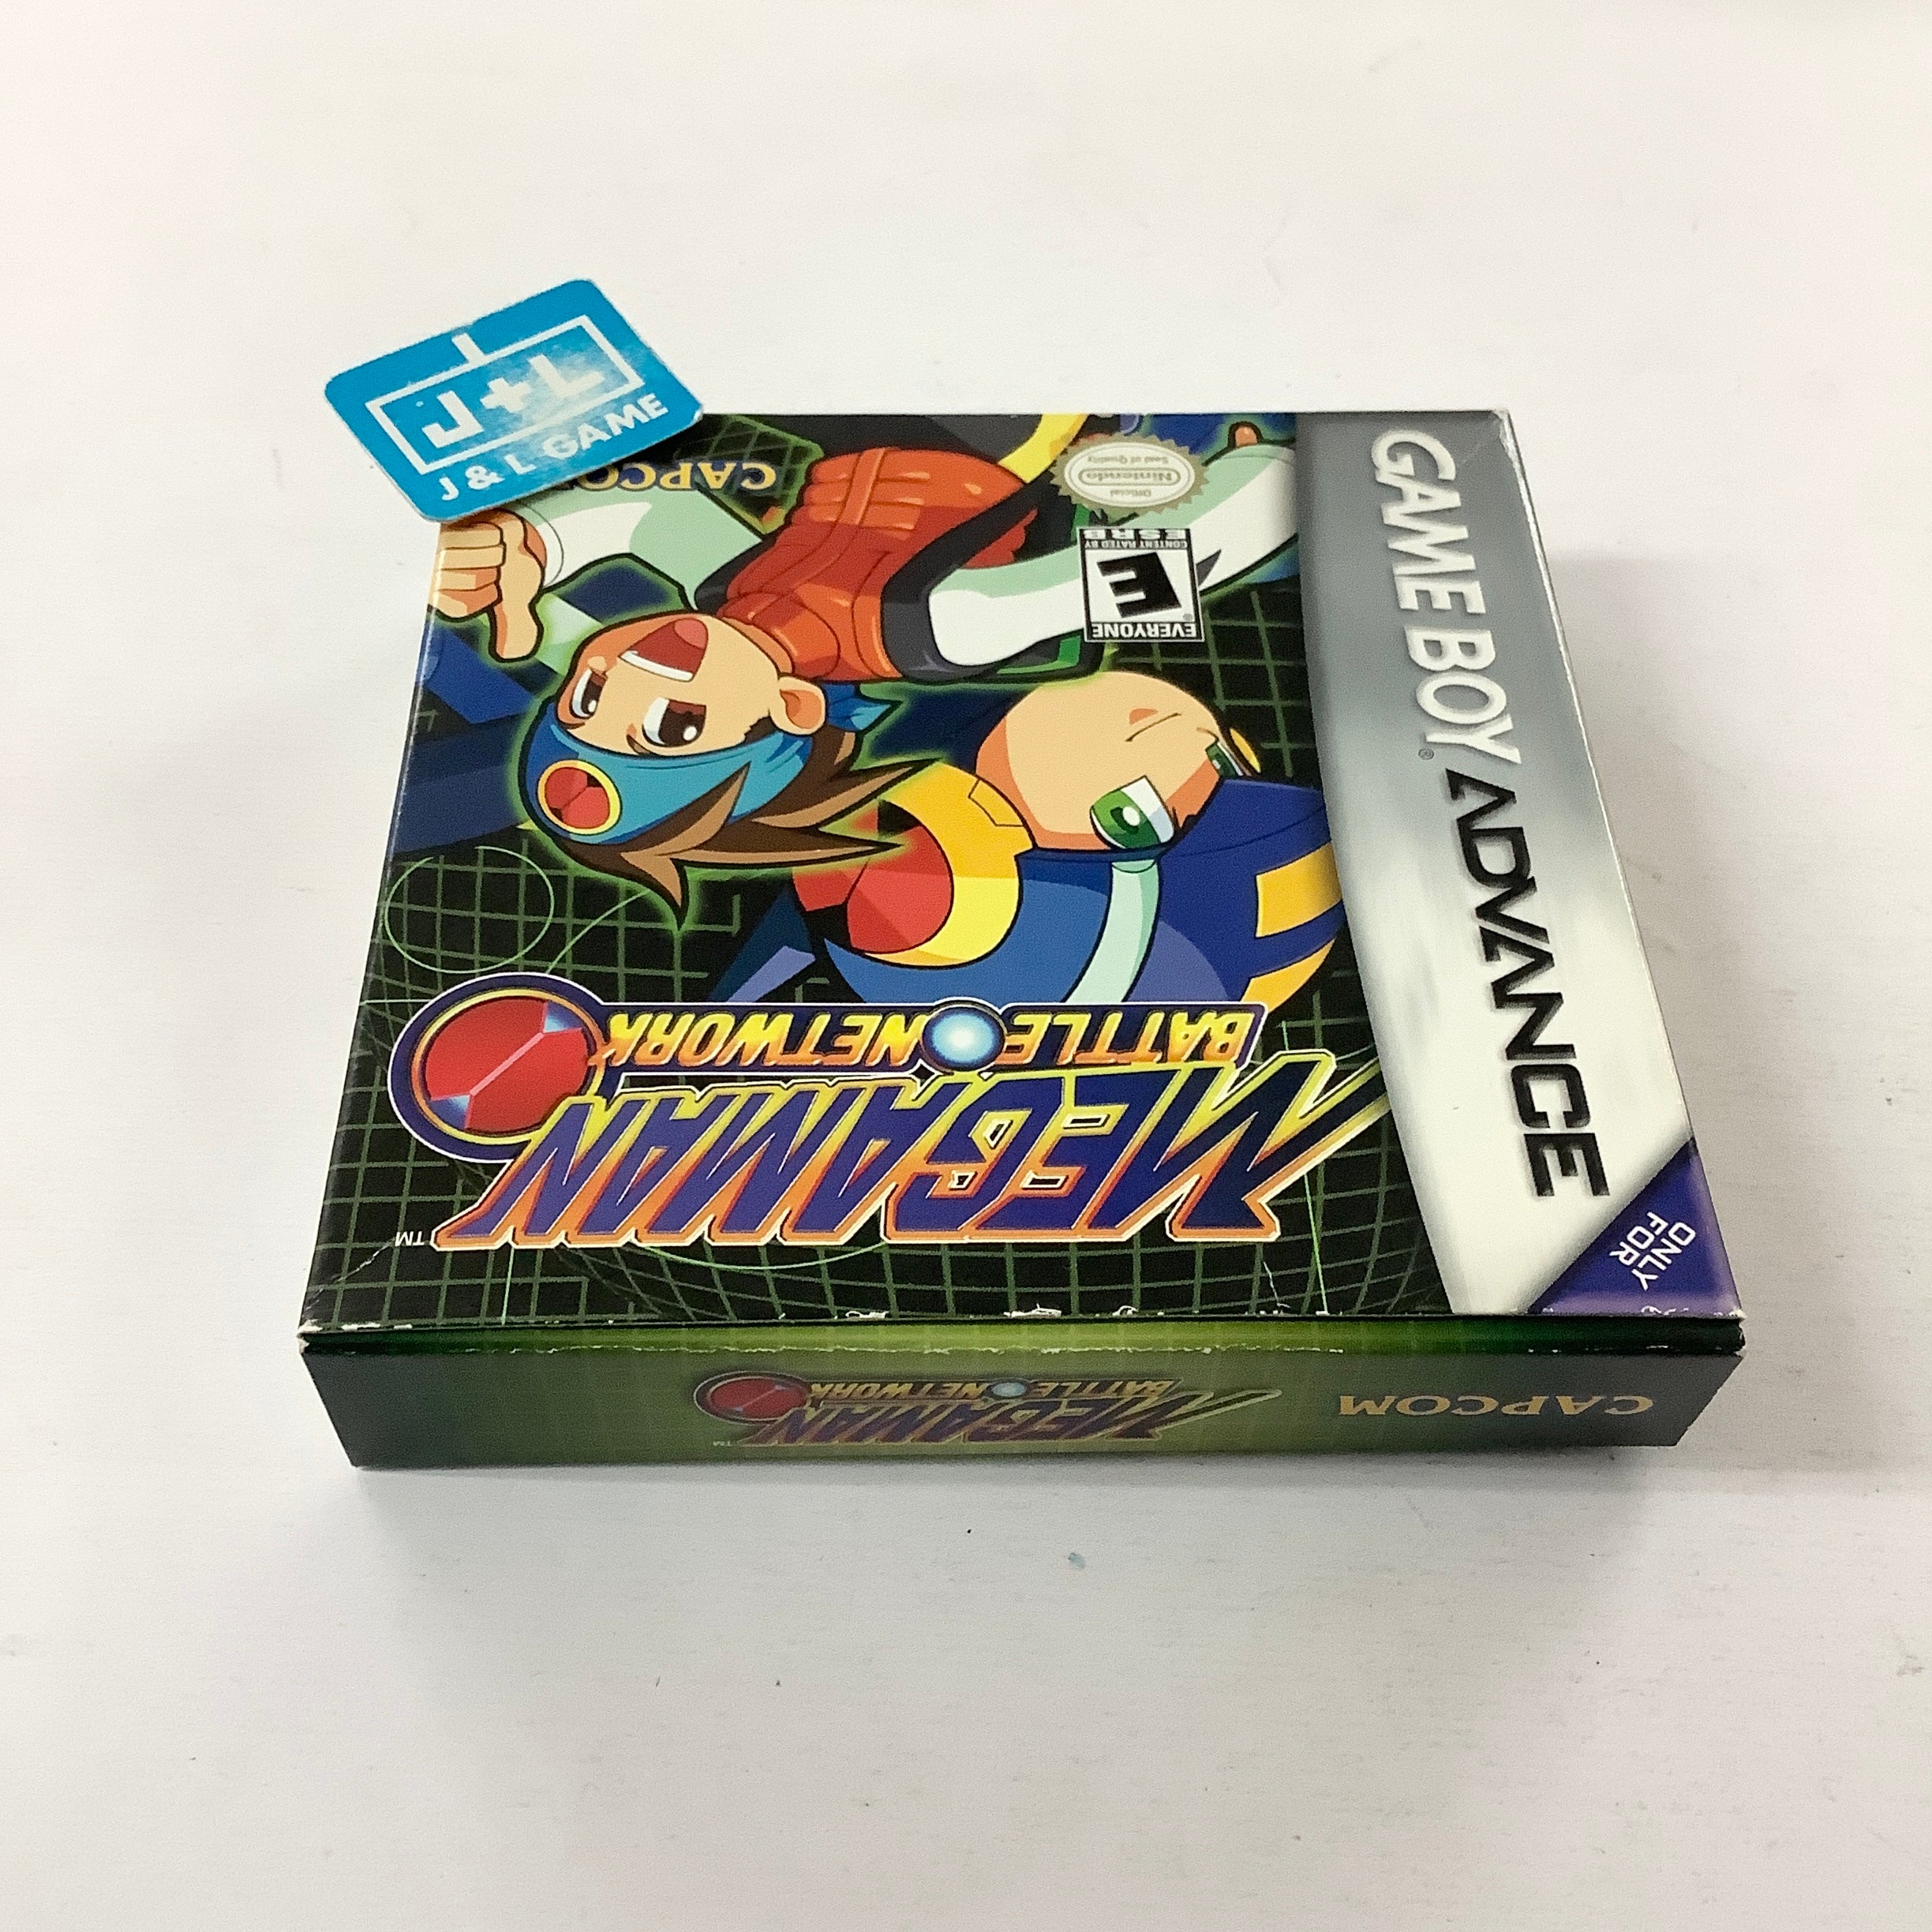 Mega Man Battle Network - (GBA) Game Boy Advance [Pre-Owned] Video Games Capcom   